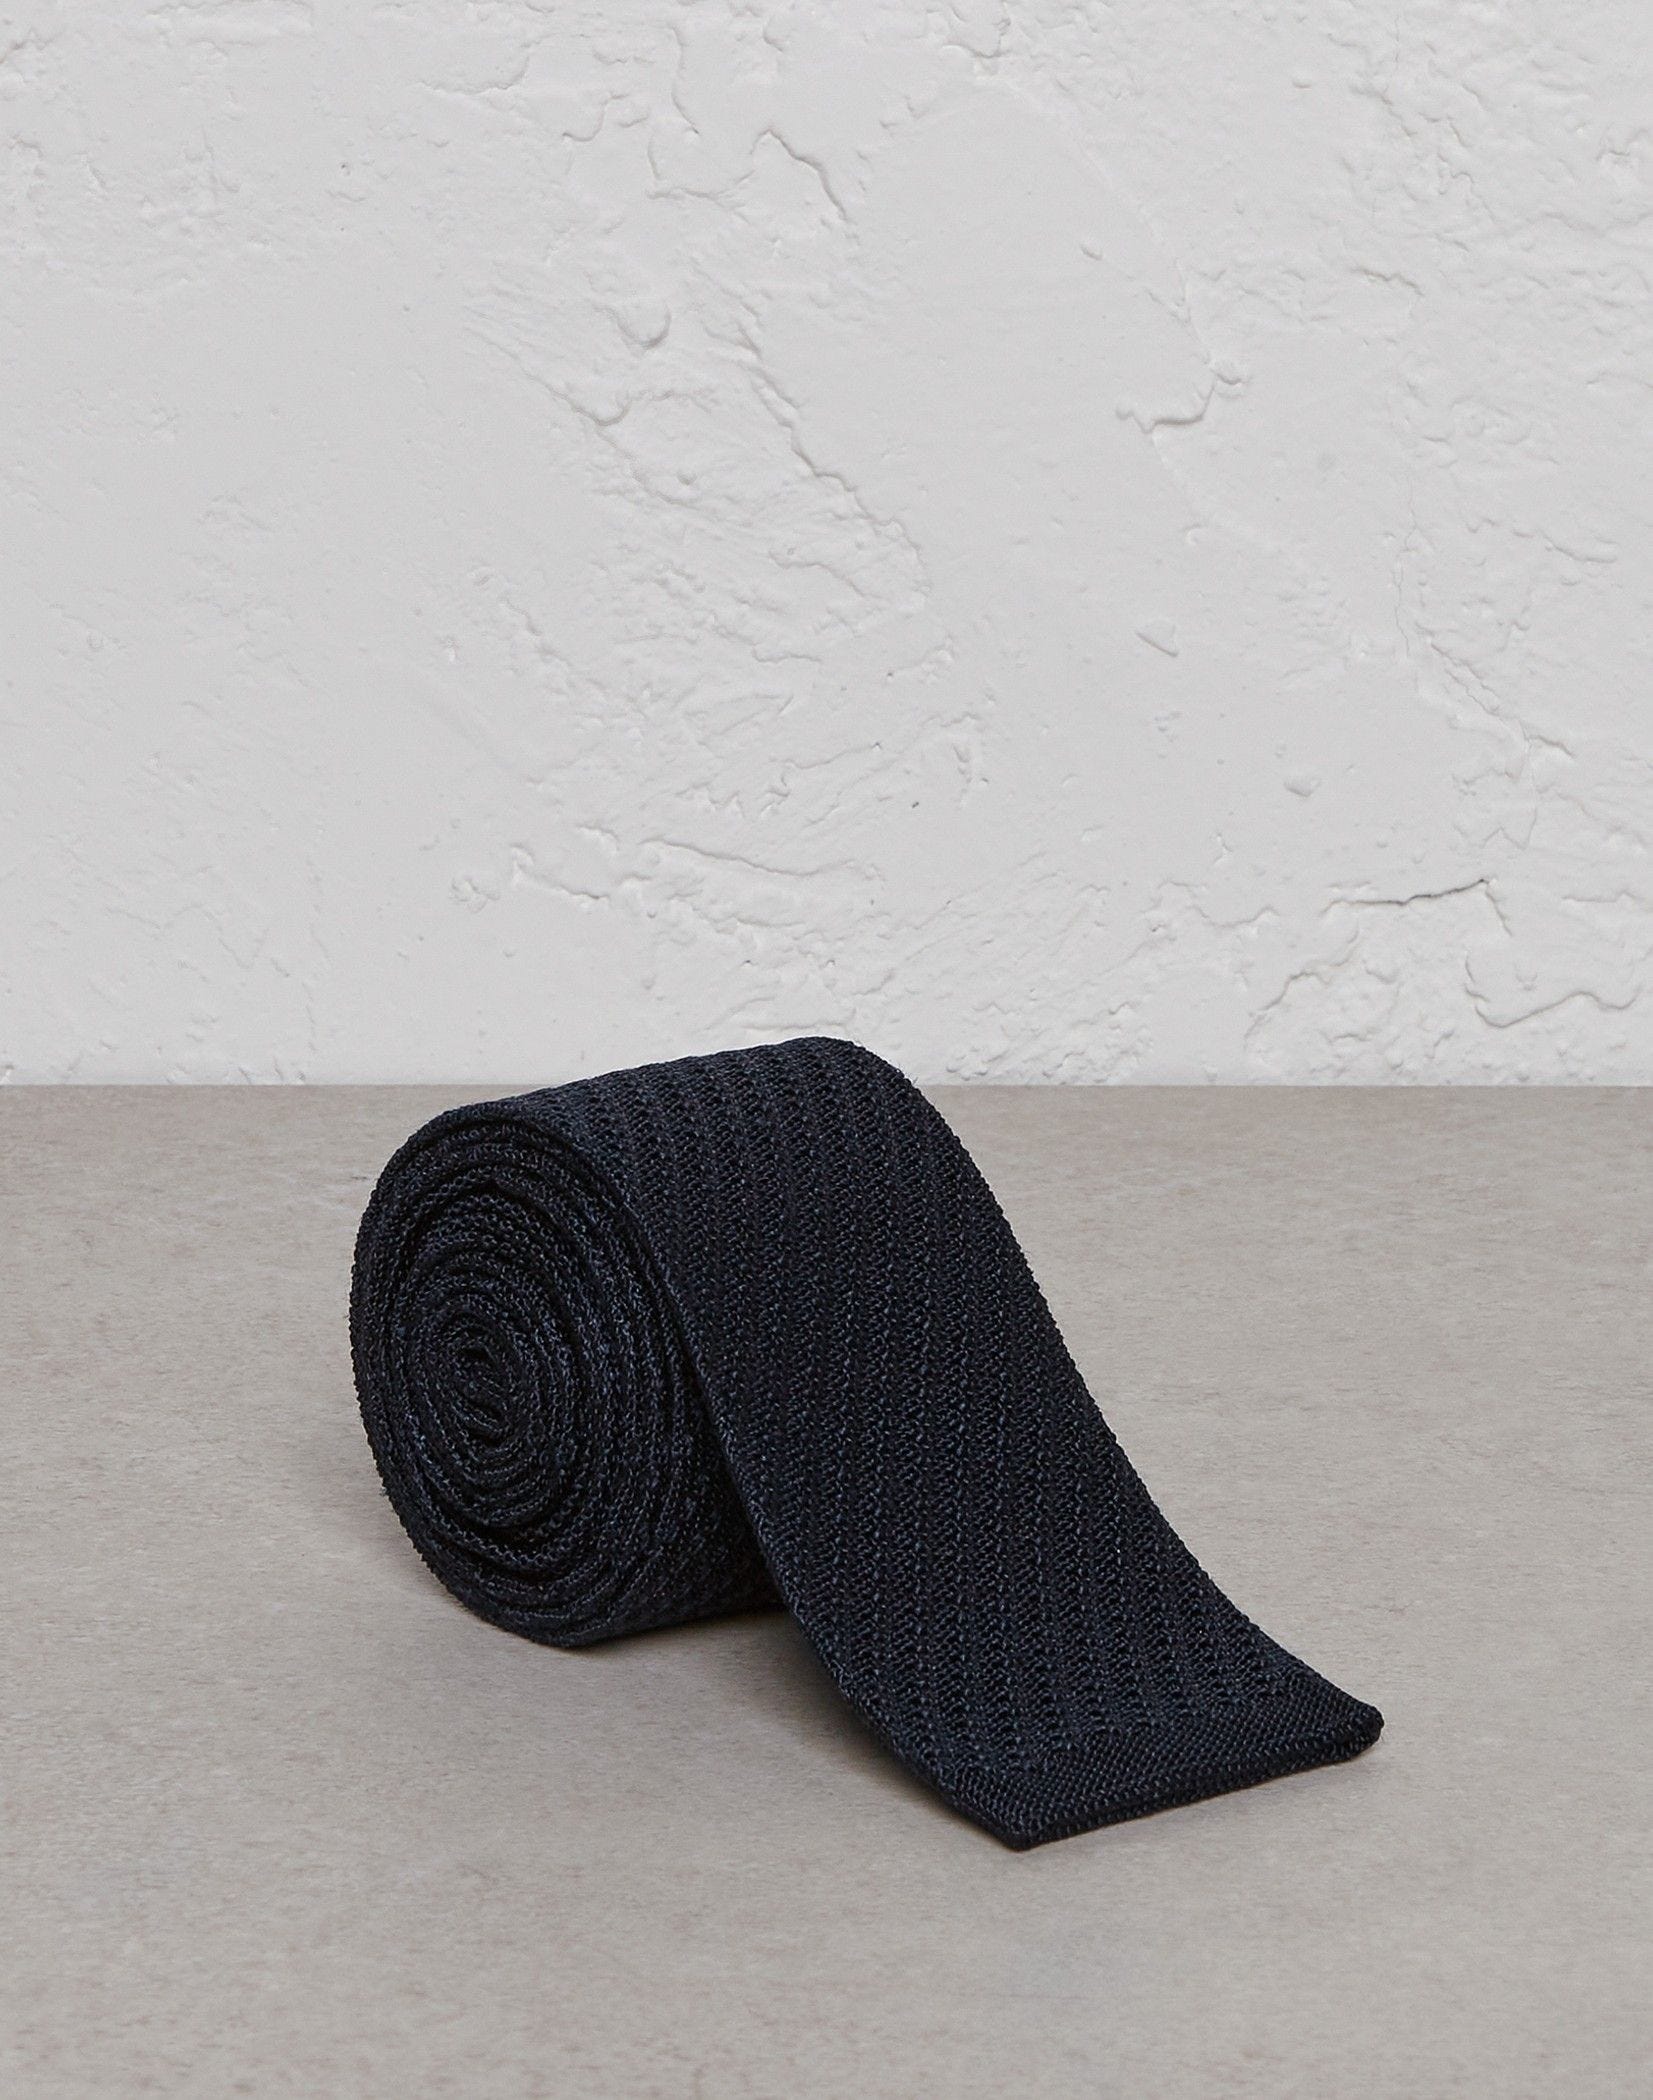 Silk knit tie with jacquard design